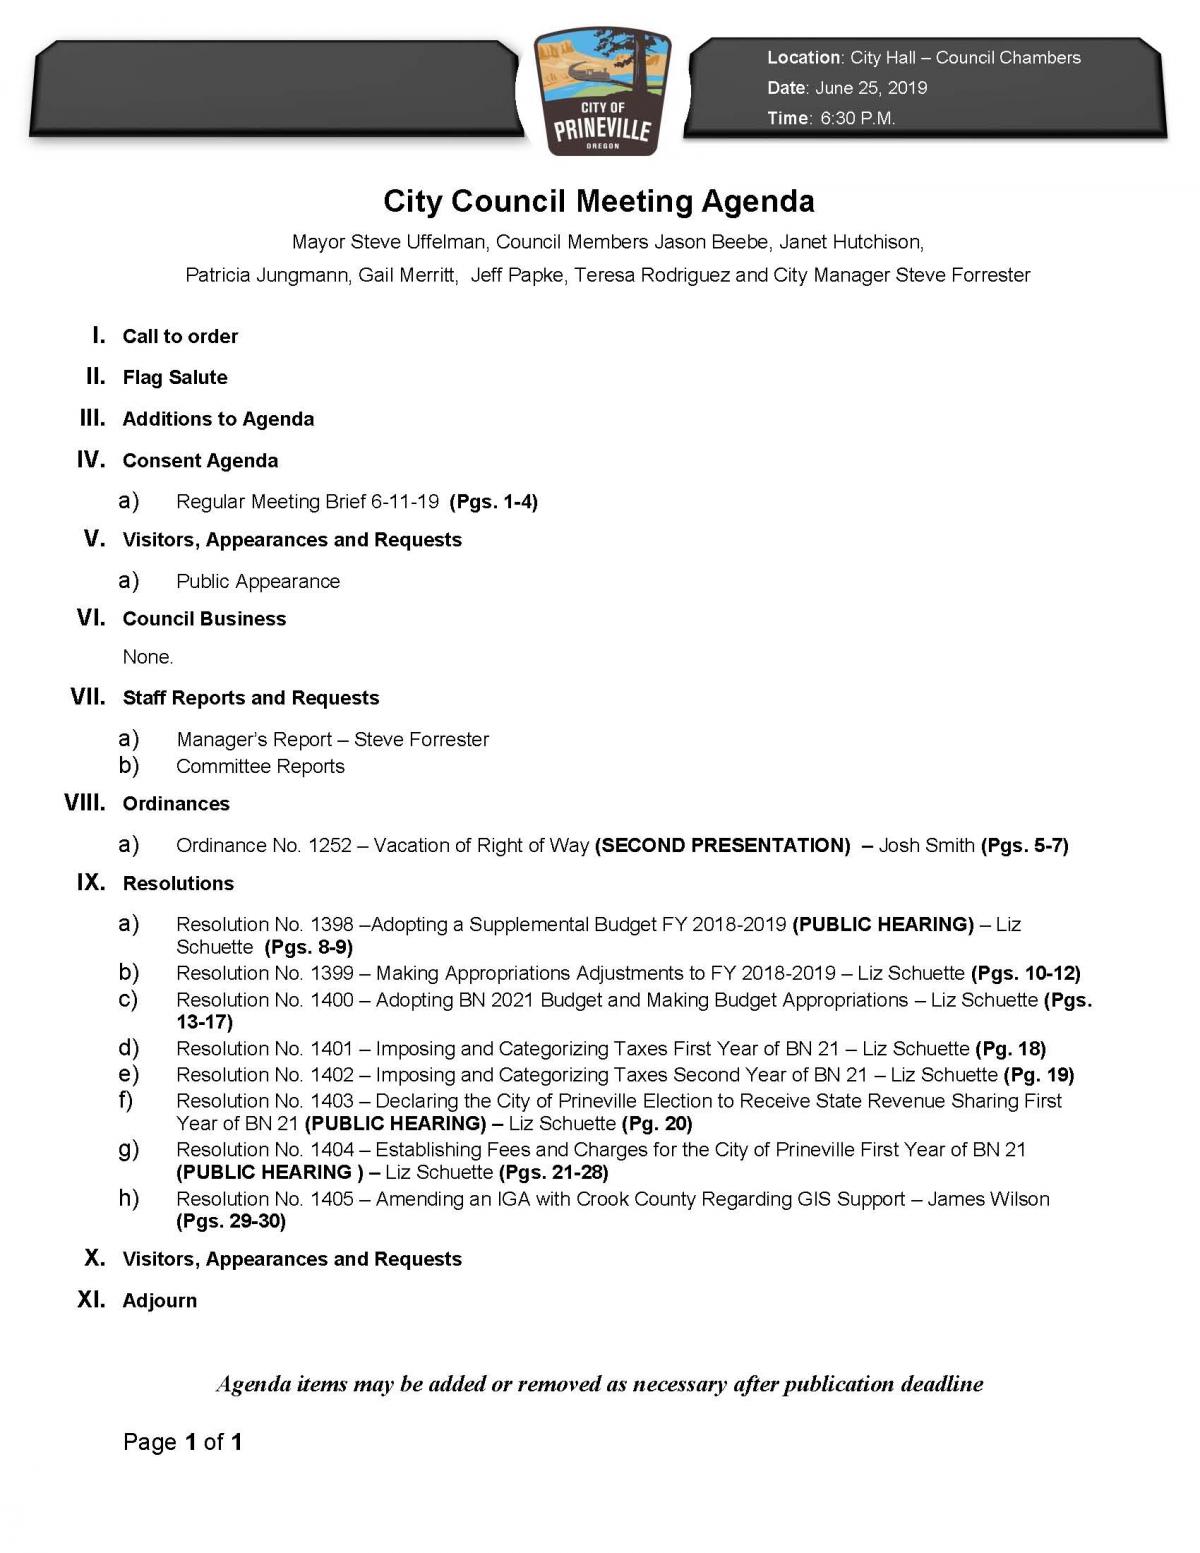 Council Agenda 6-25-19